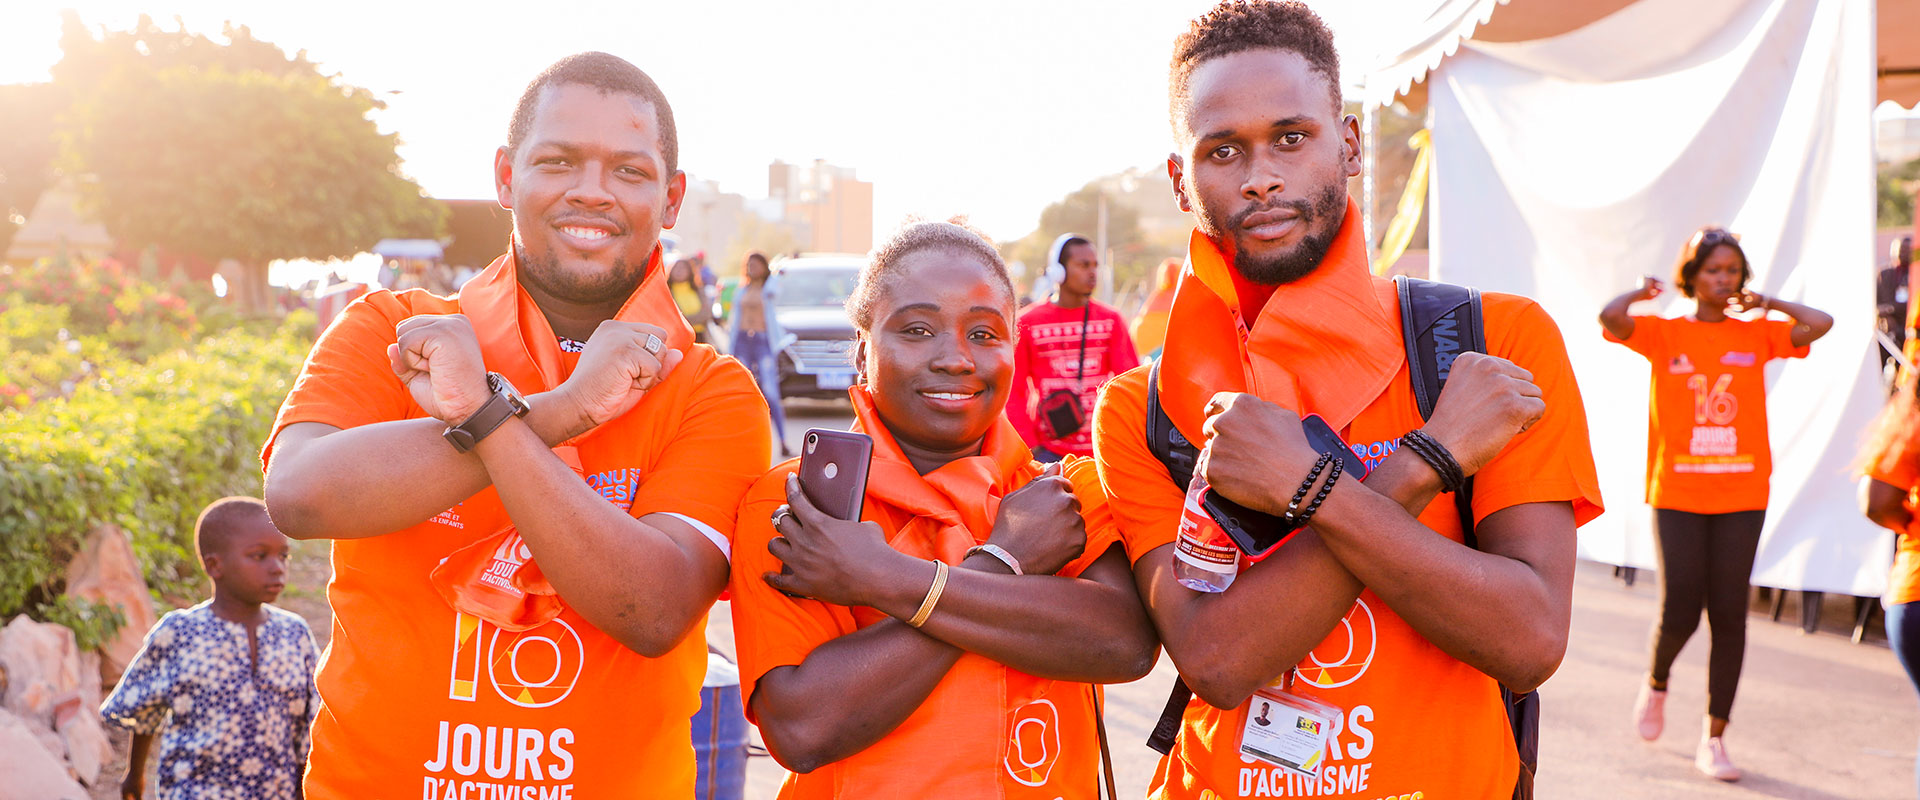 Activists in Senegal commemorate the 16 Days of Activism against Gender-Based Violence. 